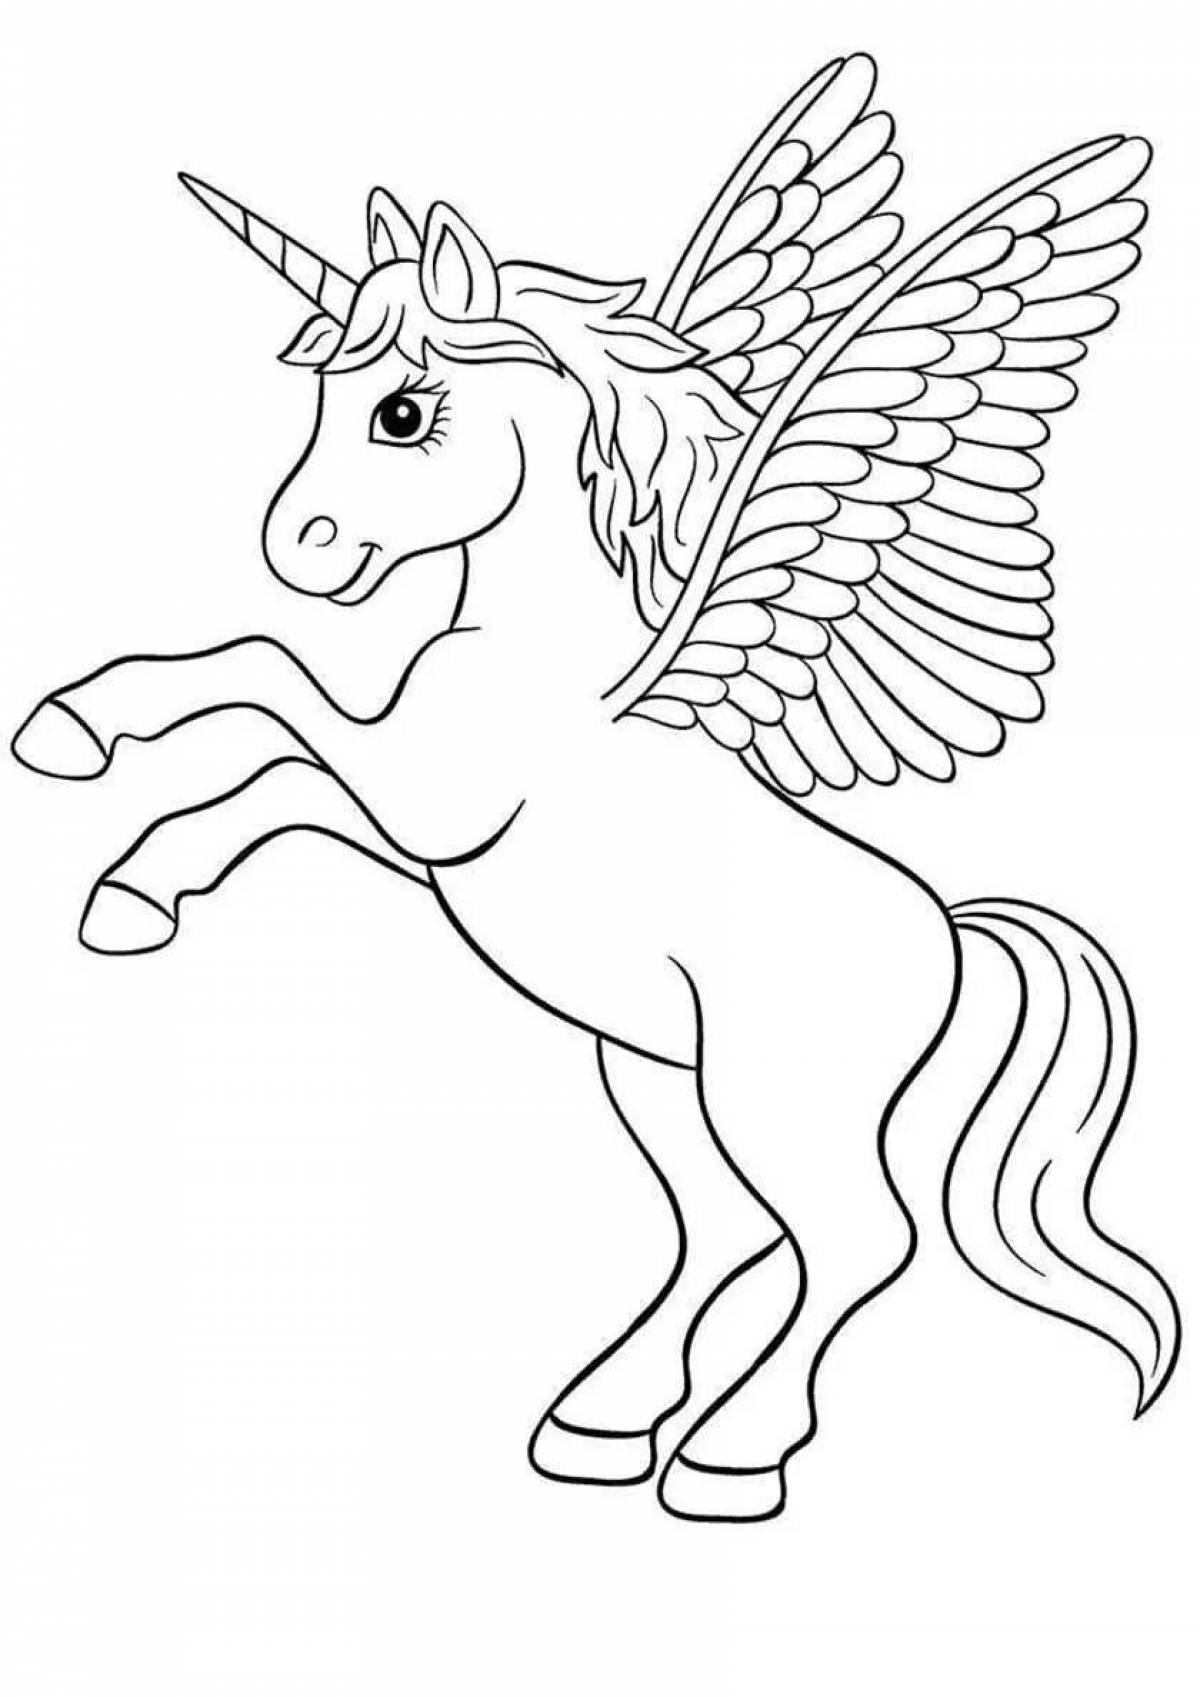 Coloring angelic unicorn